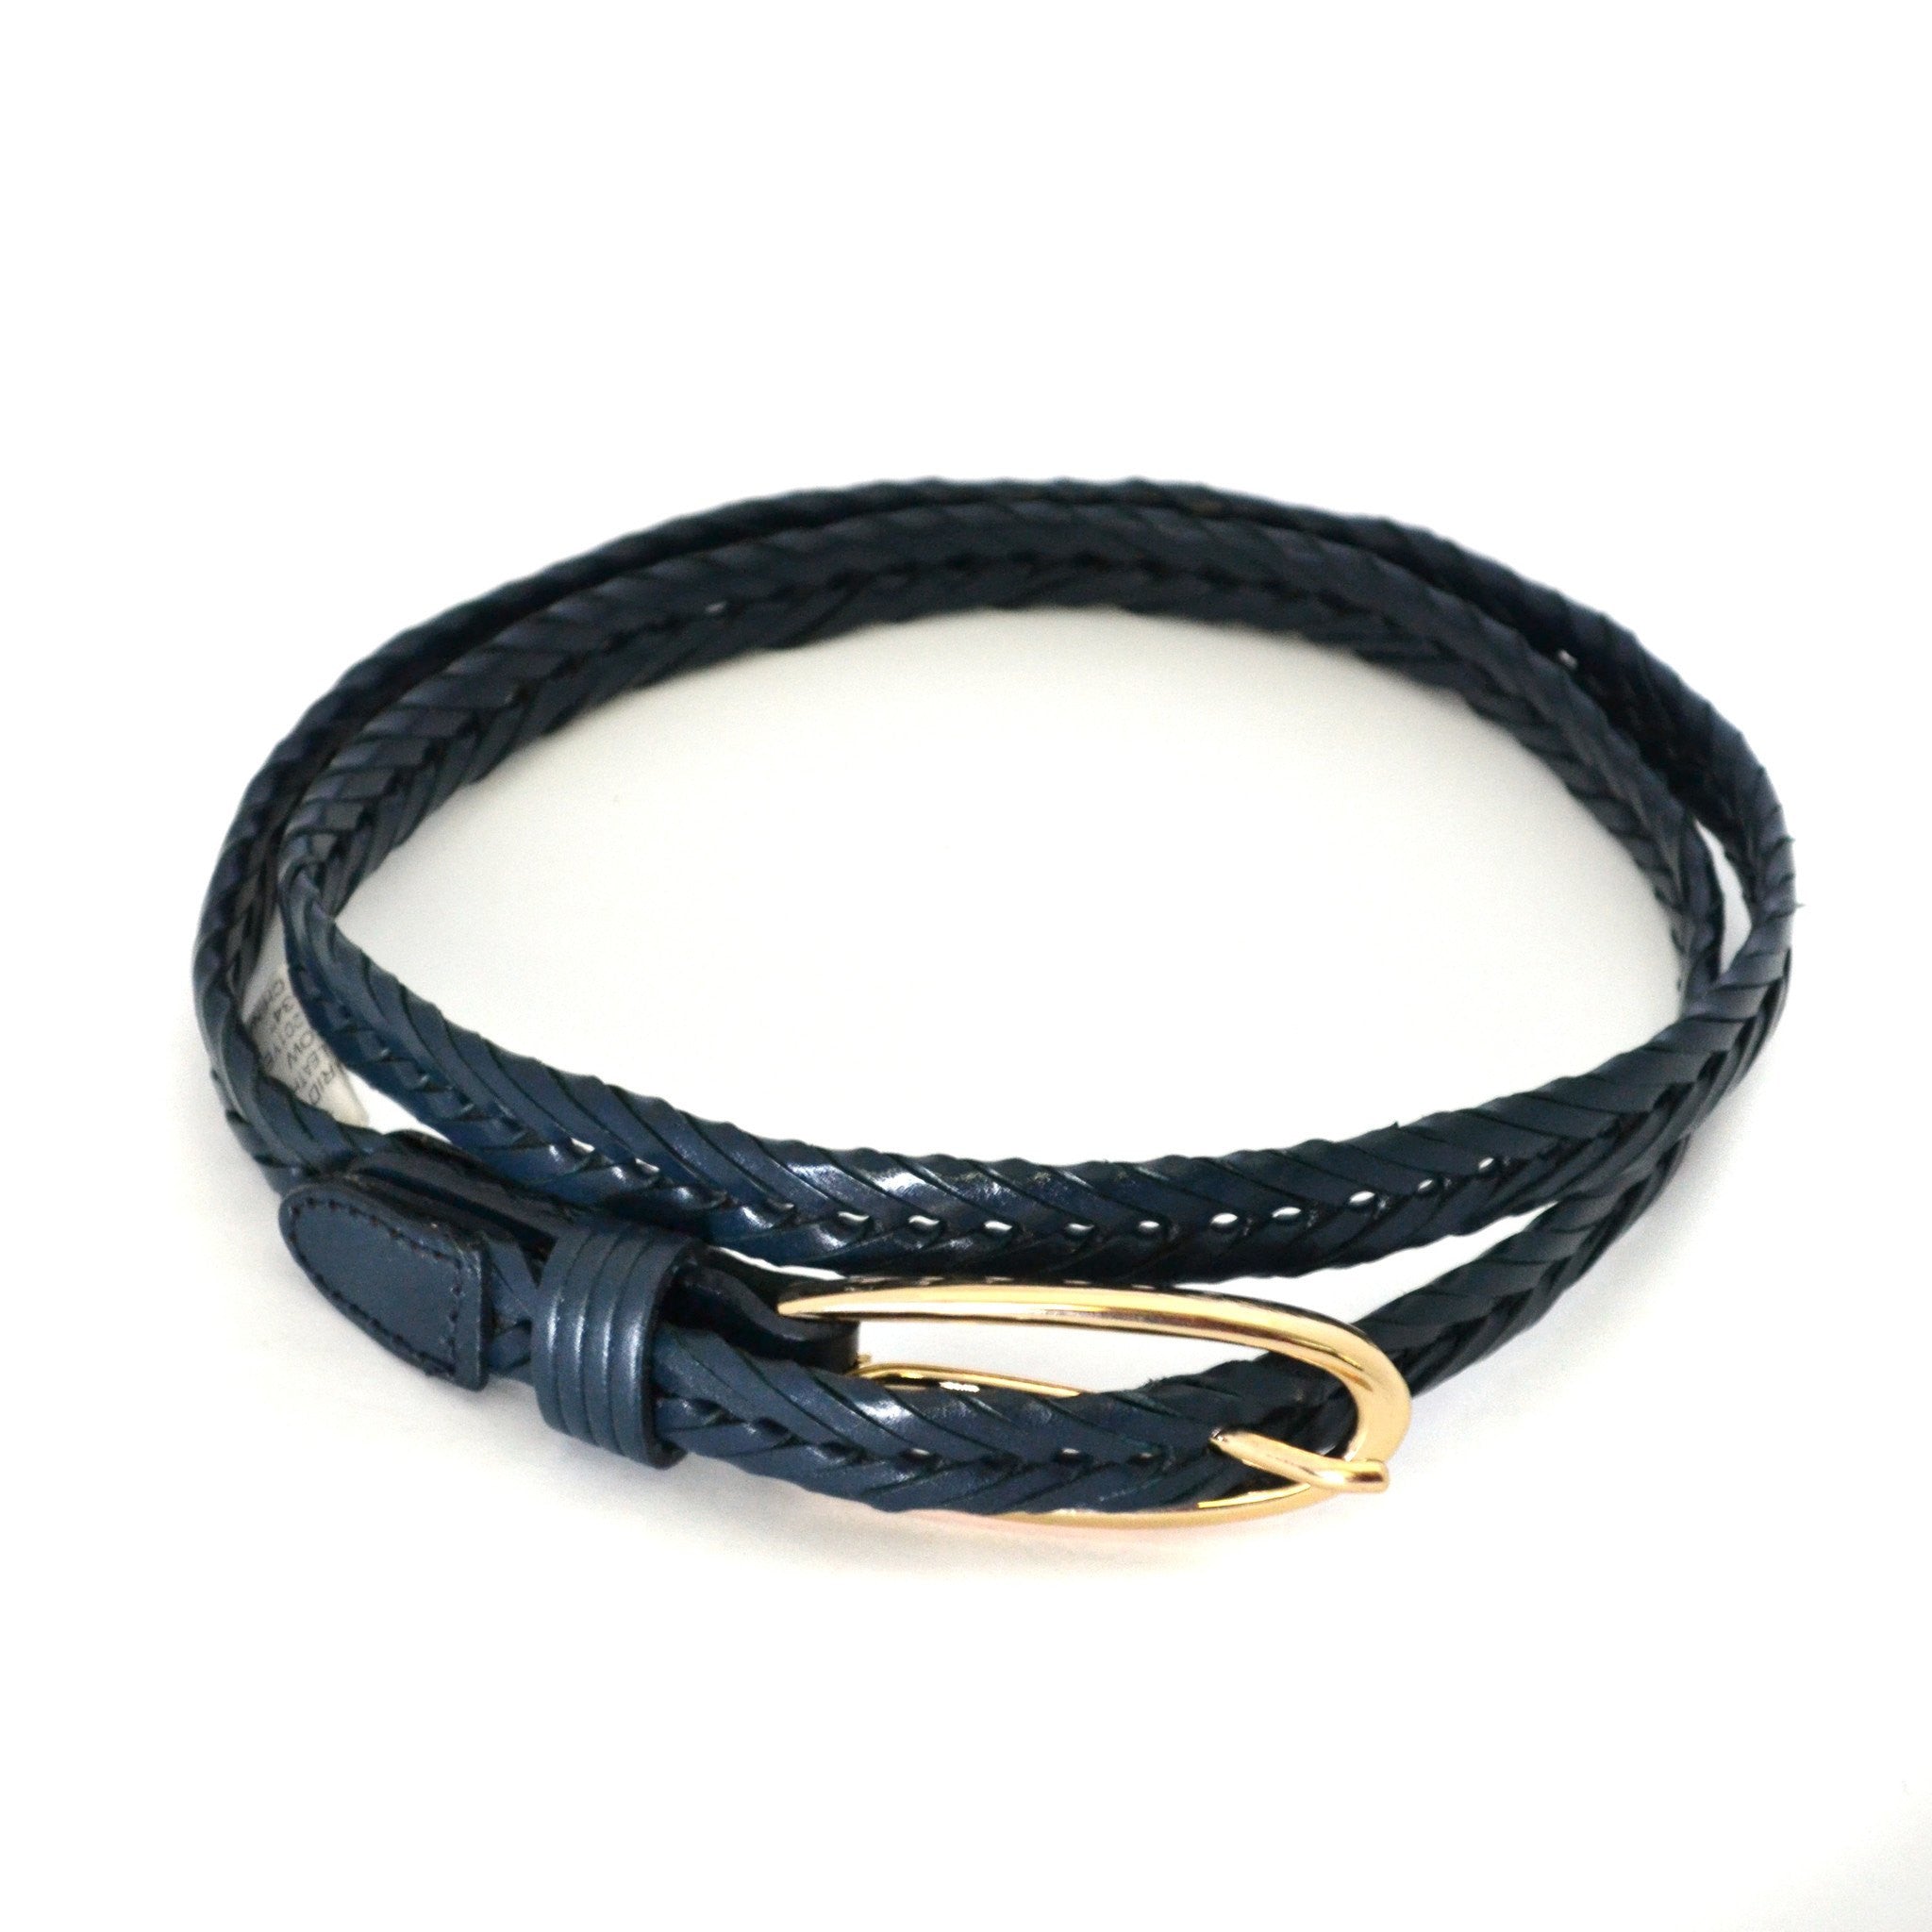 INGRID - Skinny Women's Navy Plaited Genuine Leather Belt with Gold Buckle  - Belt N Bags